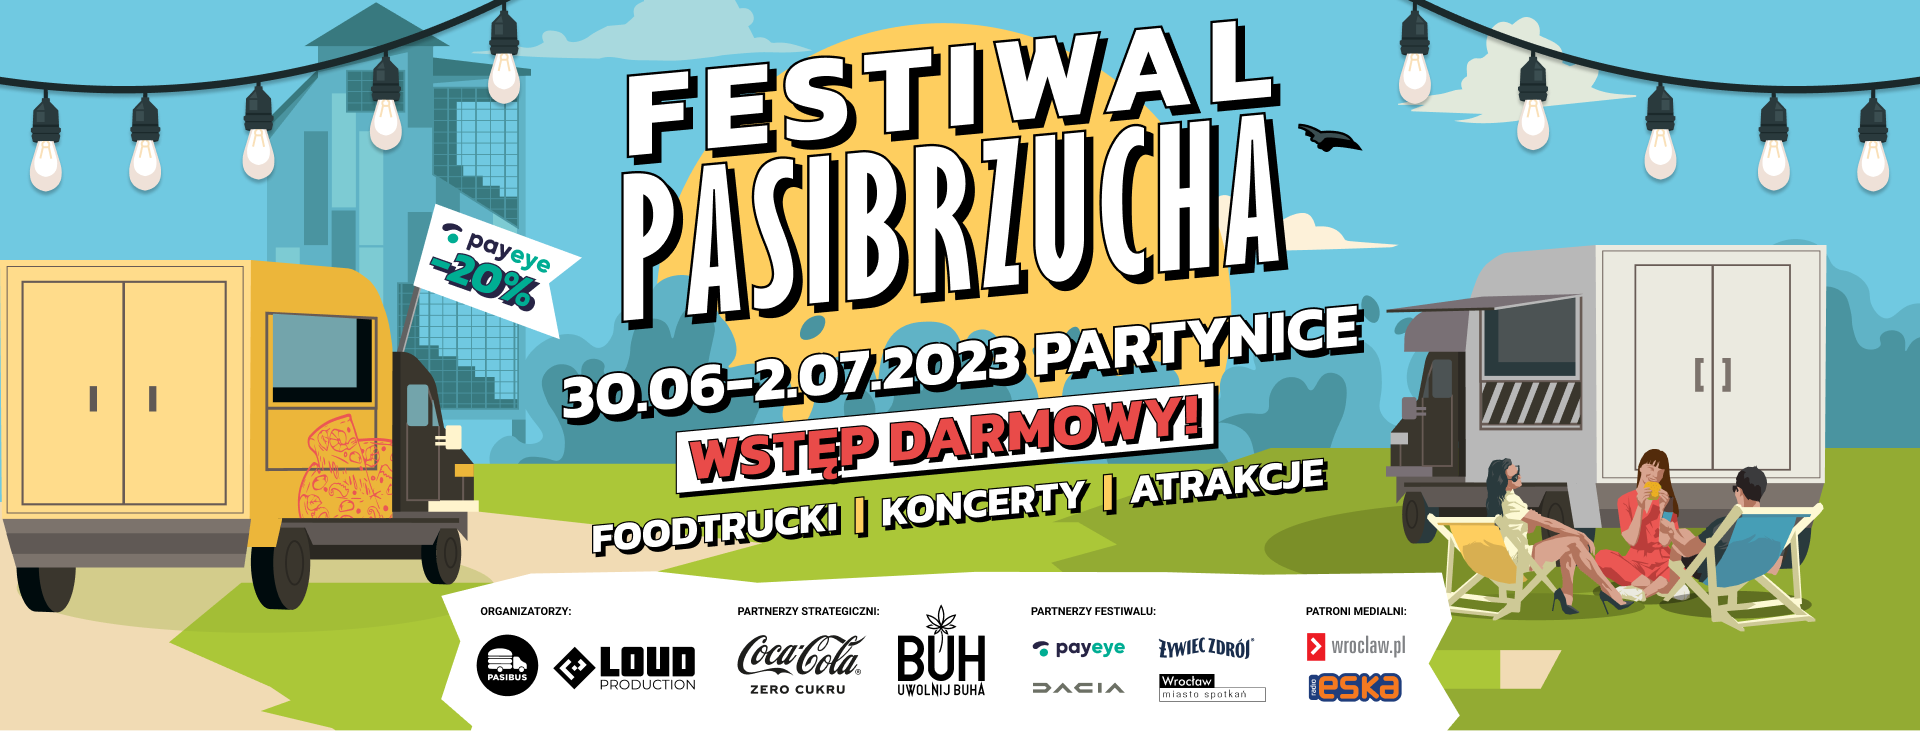 Festiwal Pasibrzucha już w ten weekend na wrocławskich Partynicach